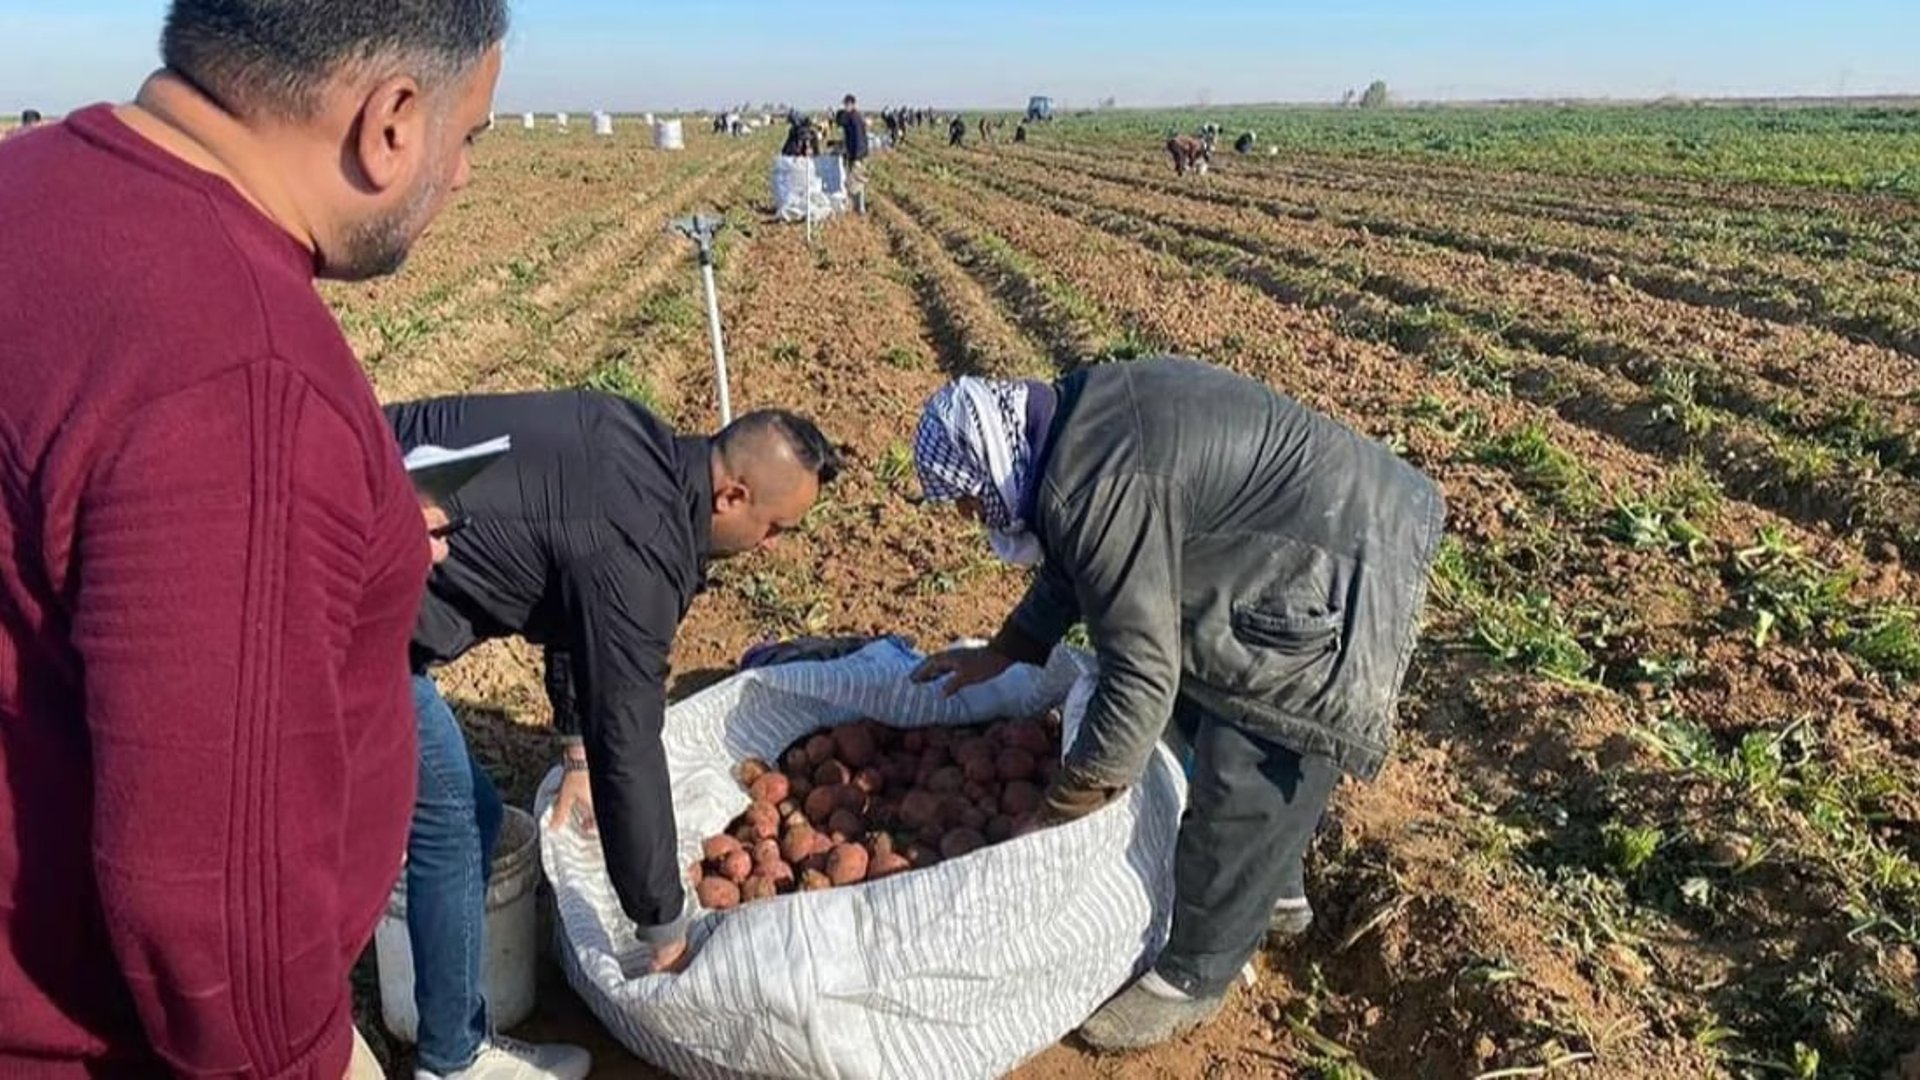 Diyalas promising potato harvest reaping high yields